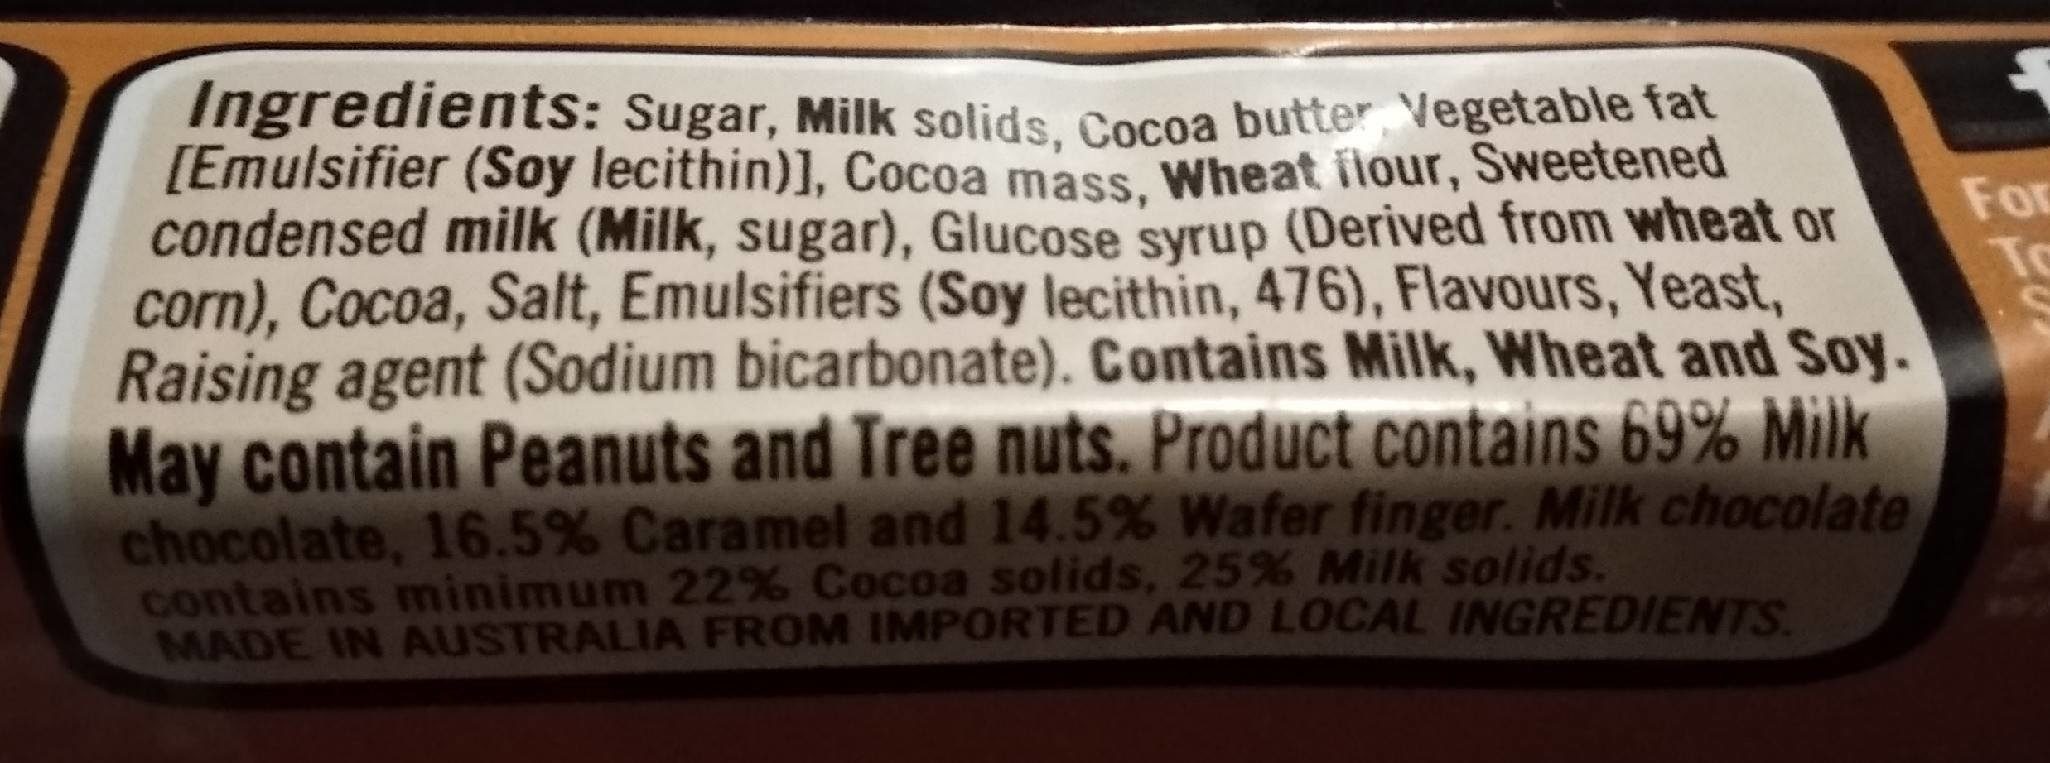 KitKat Chunky Gooey Caramel - Ingredients - en